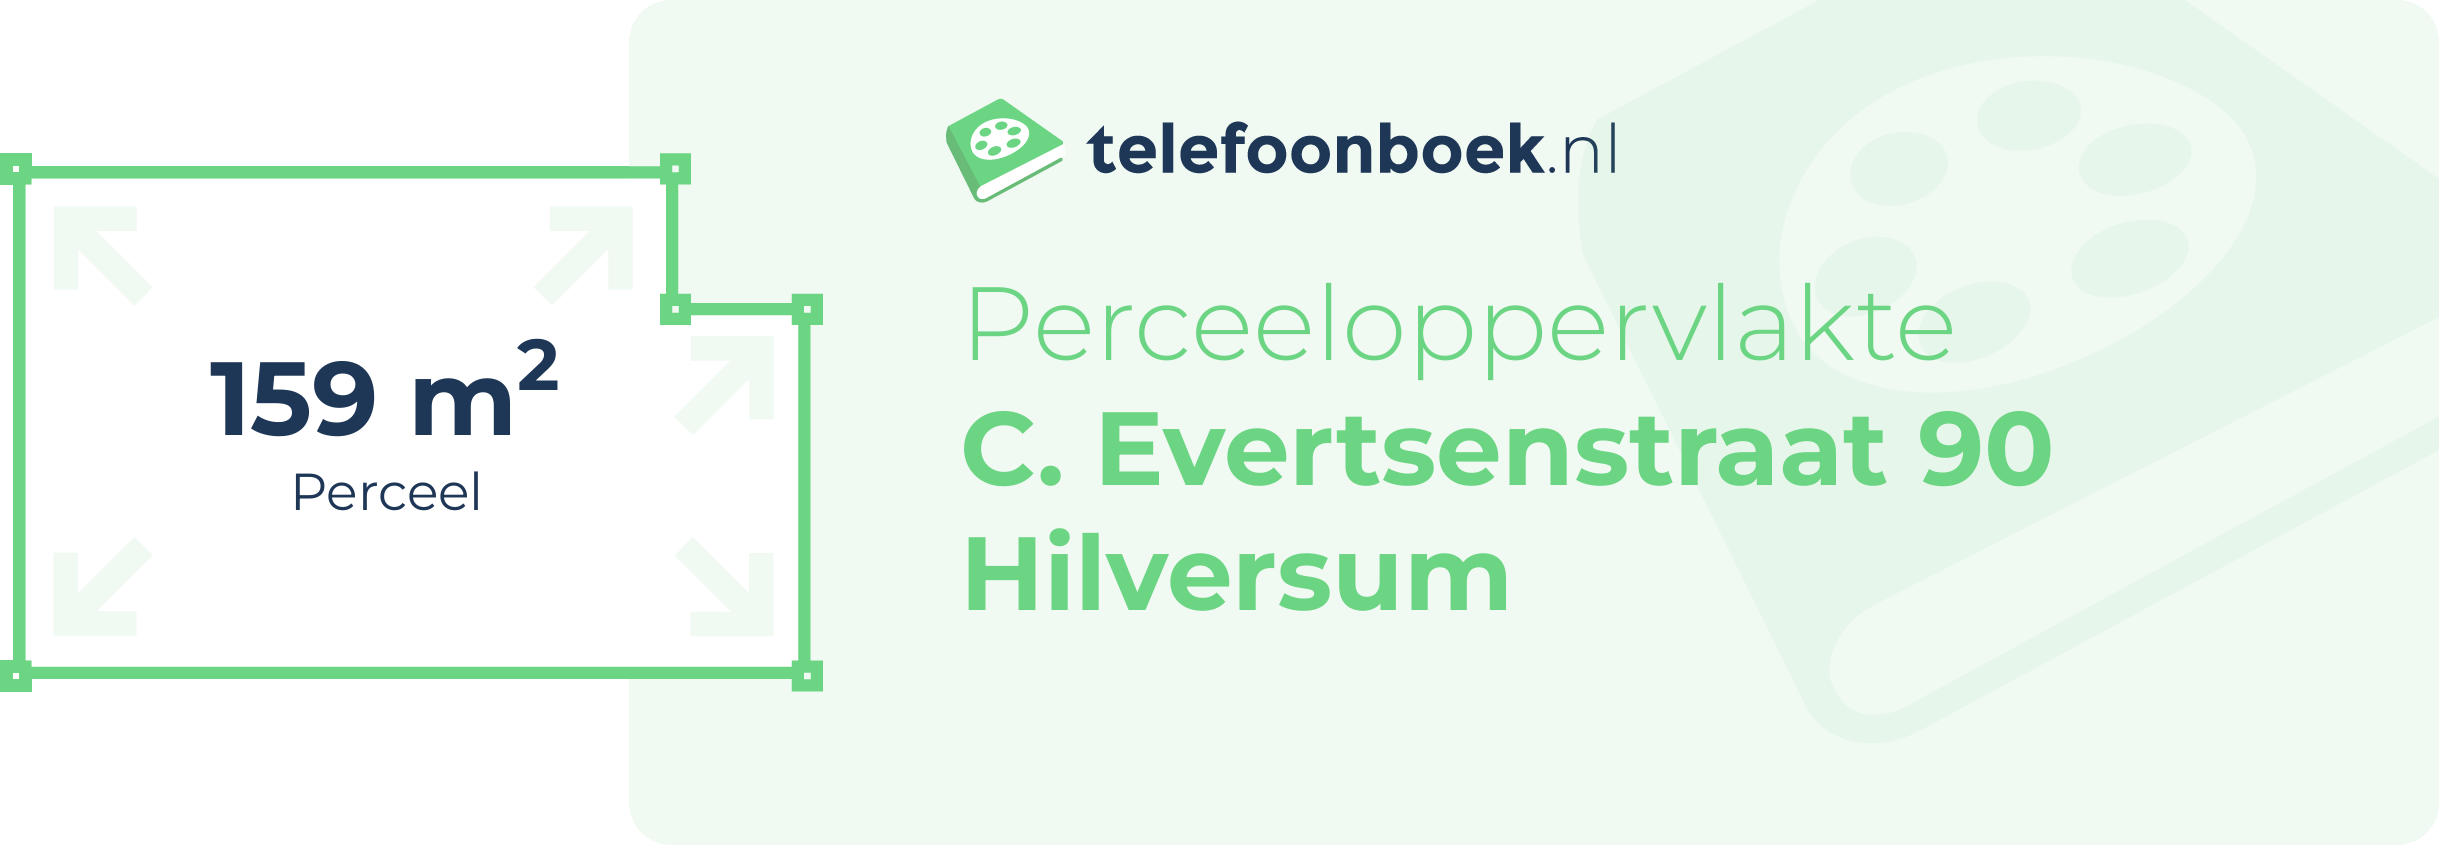 Perceeloppervlakte C. Evertsenstraat 90 Hilversum